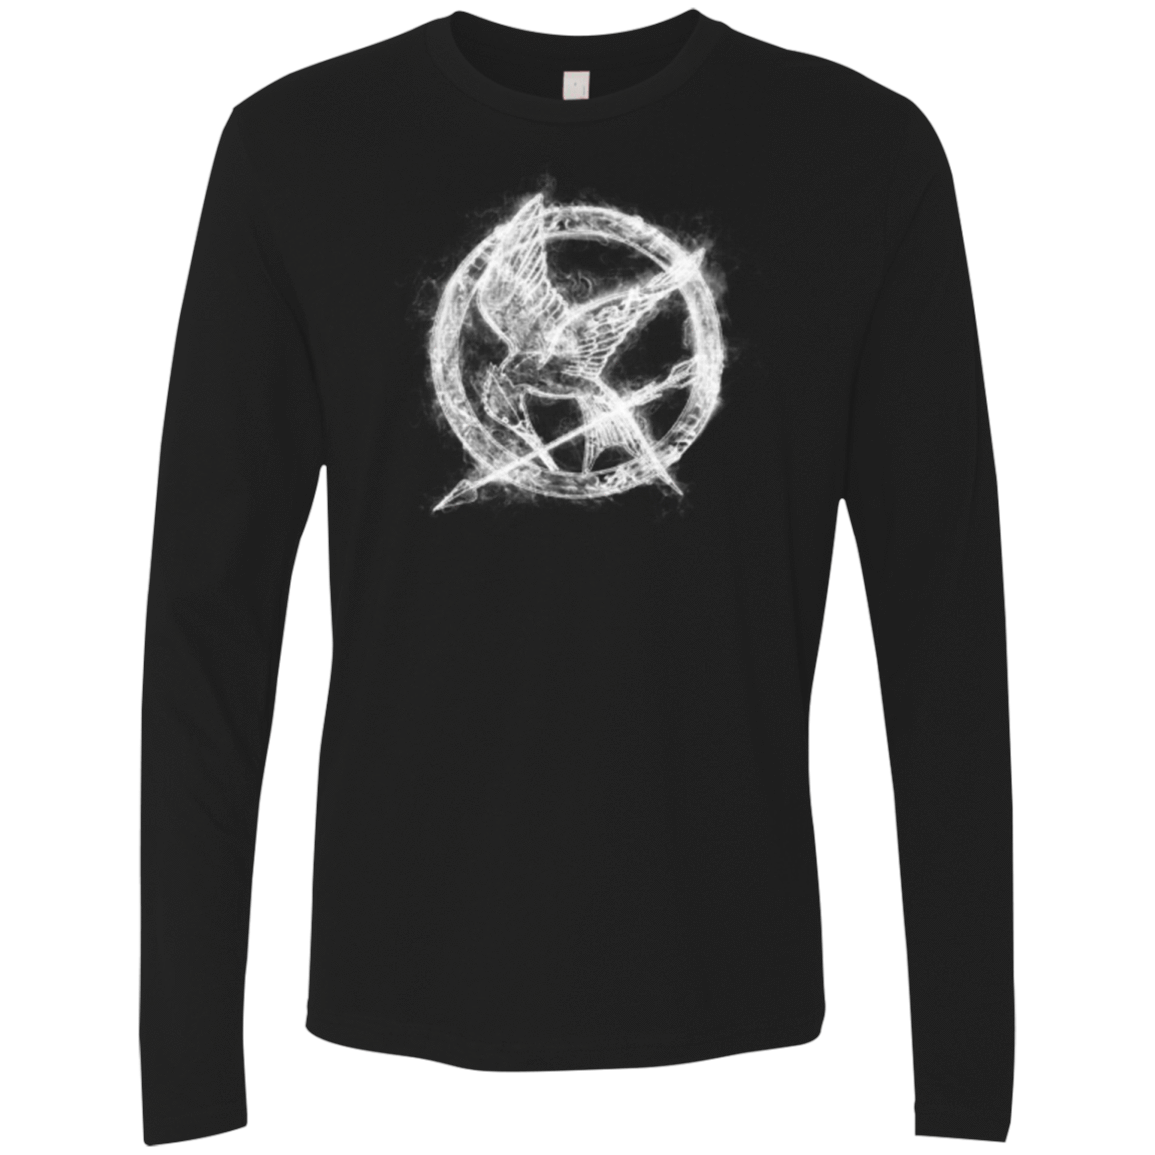 T-Shirts Black / Small Hunger Games Smoke Men's Premium Long Sleeve